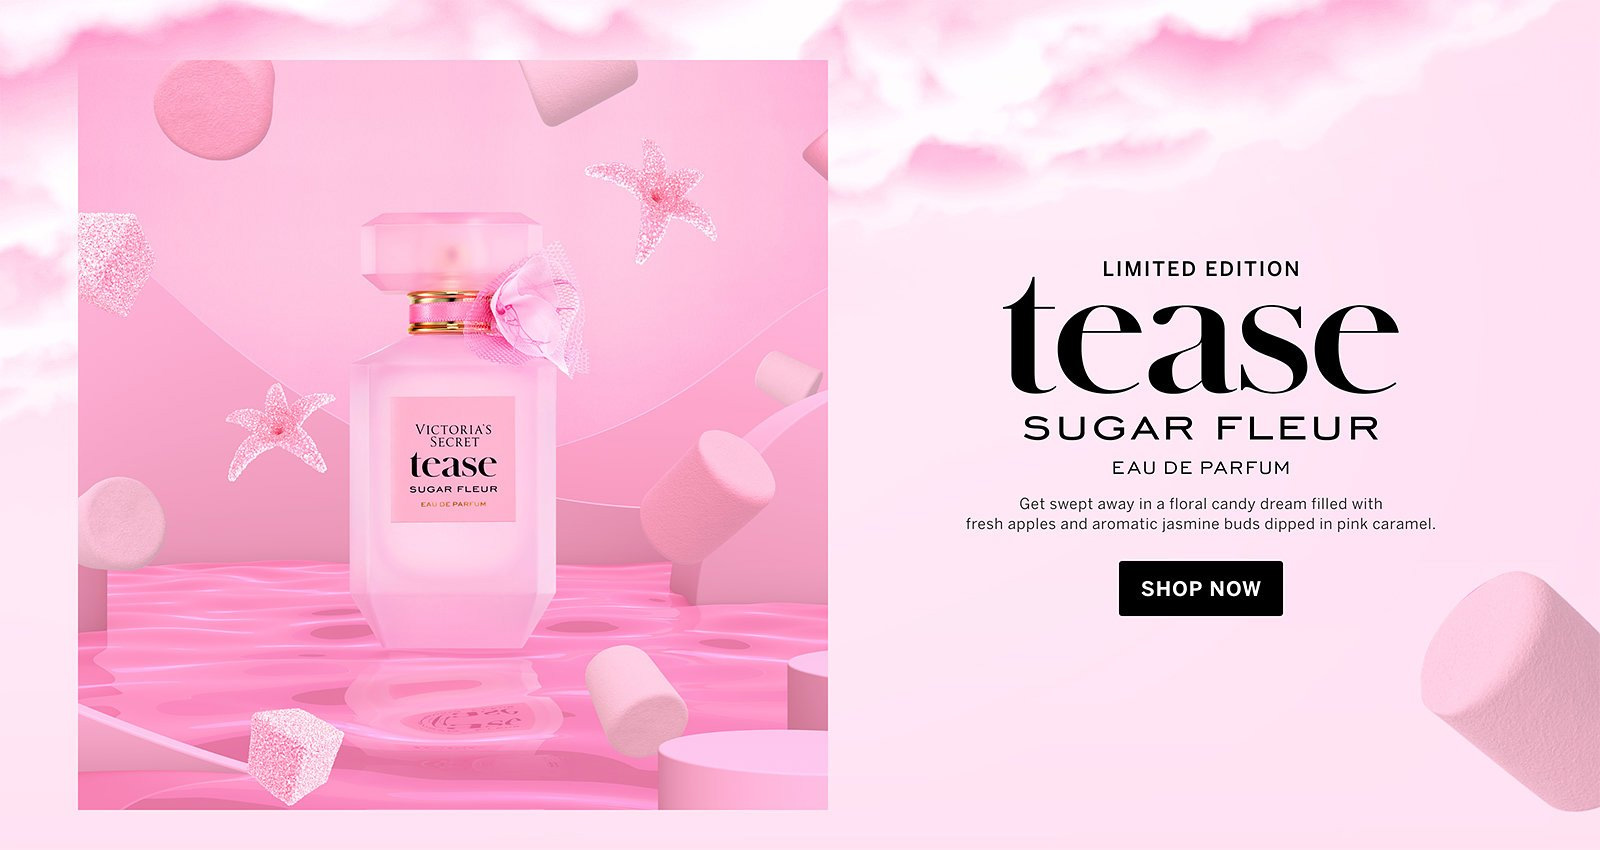 Victoria's Secret Tease Sugar Fleur Fragrance